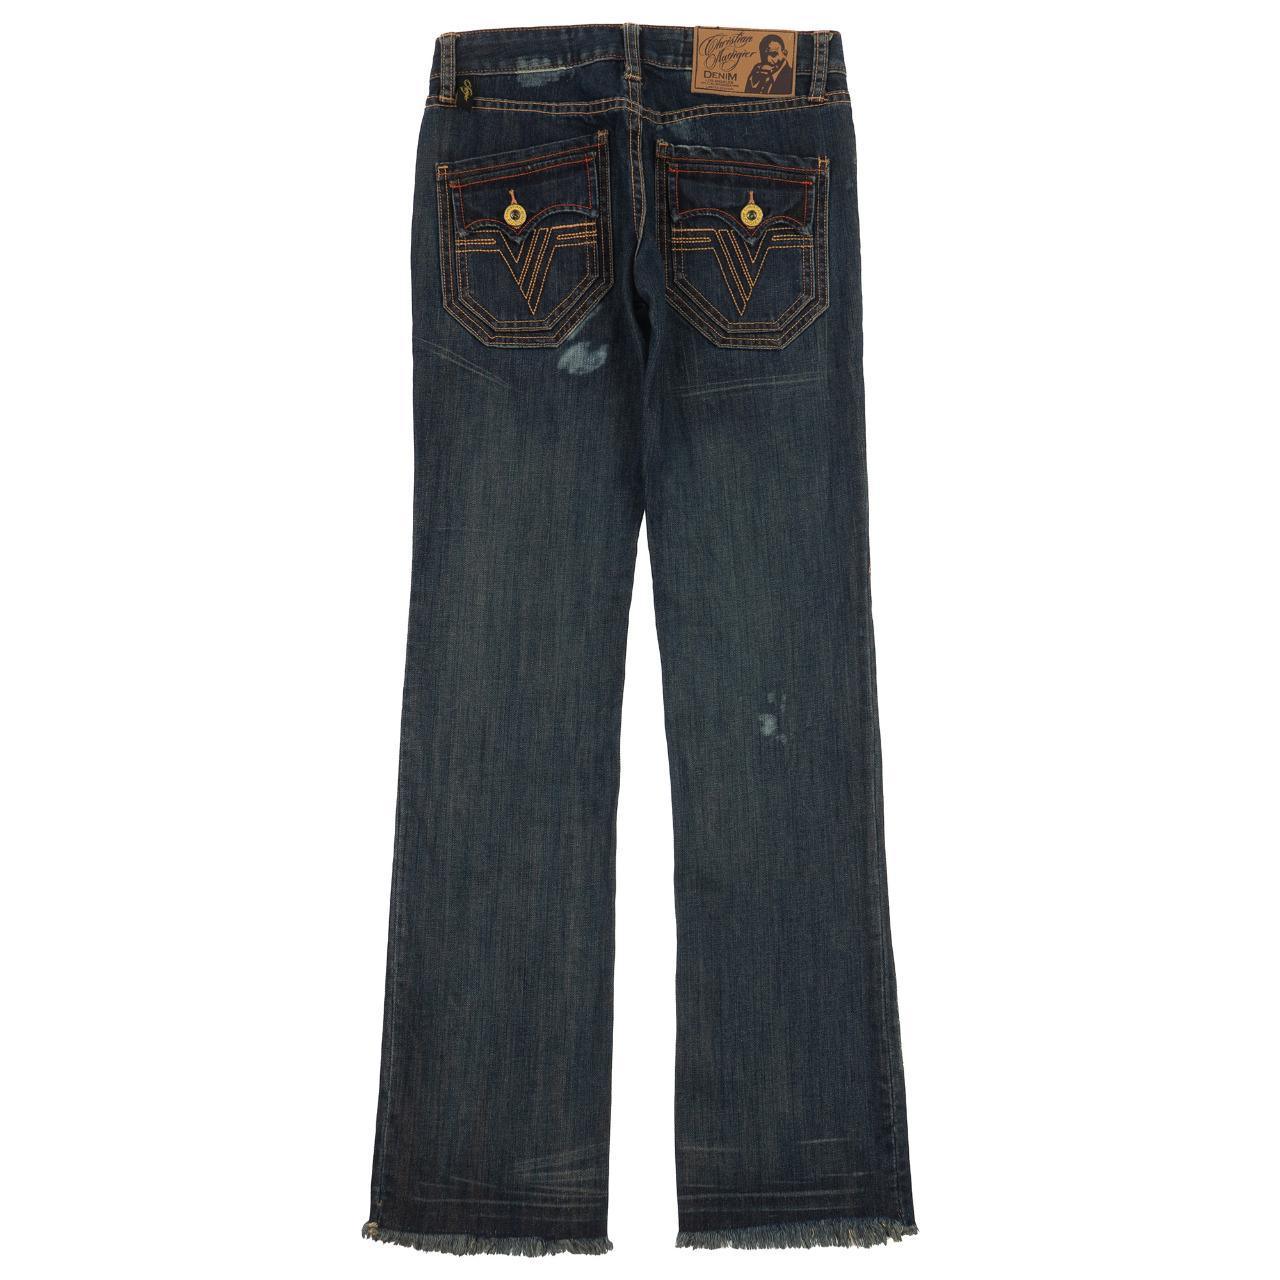 Vintage Christian Audigier Denim Jeans Size W28 - Known Source